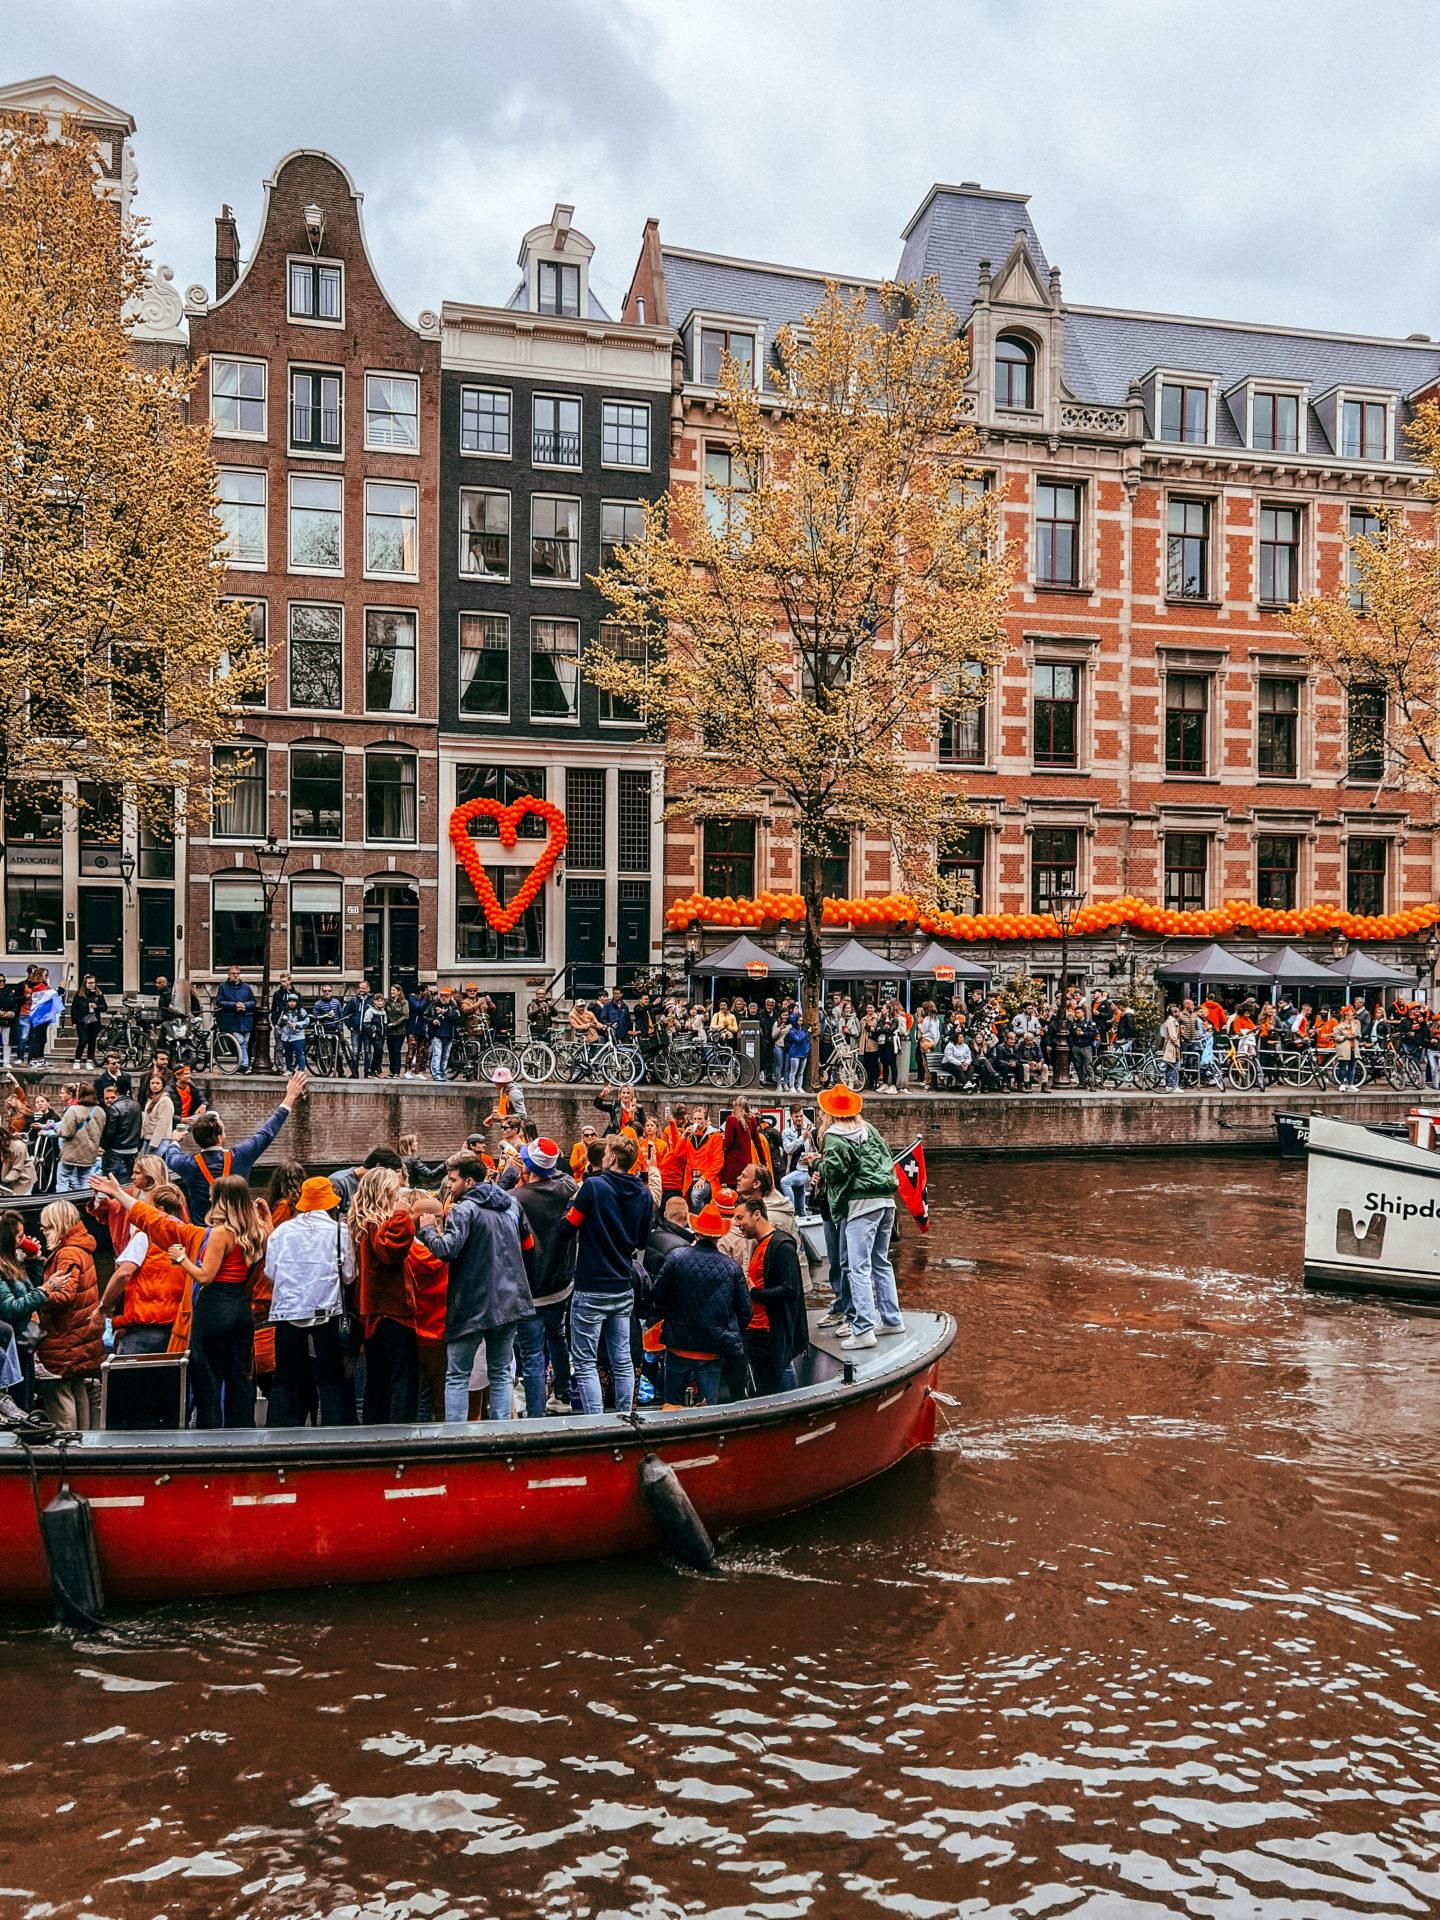 King's day celebrations in Amsterdam